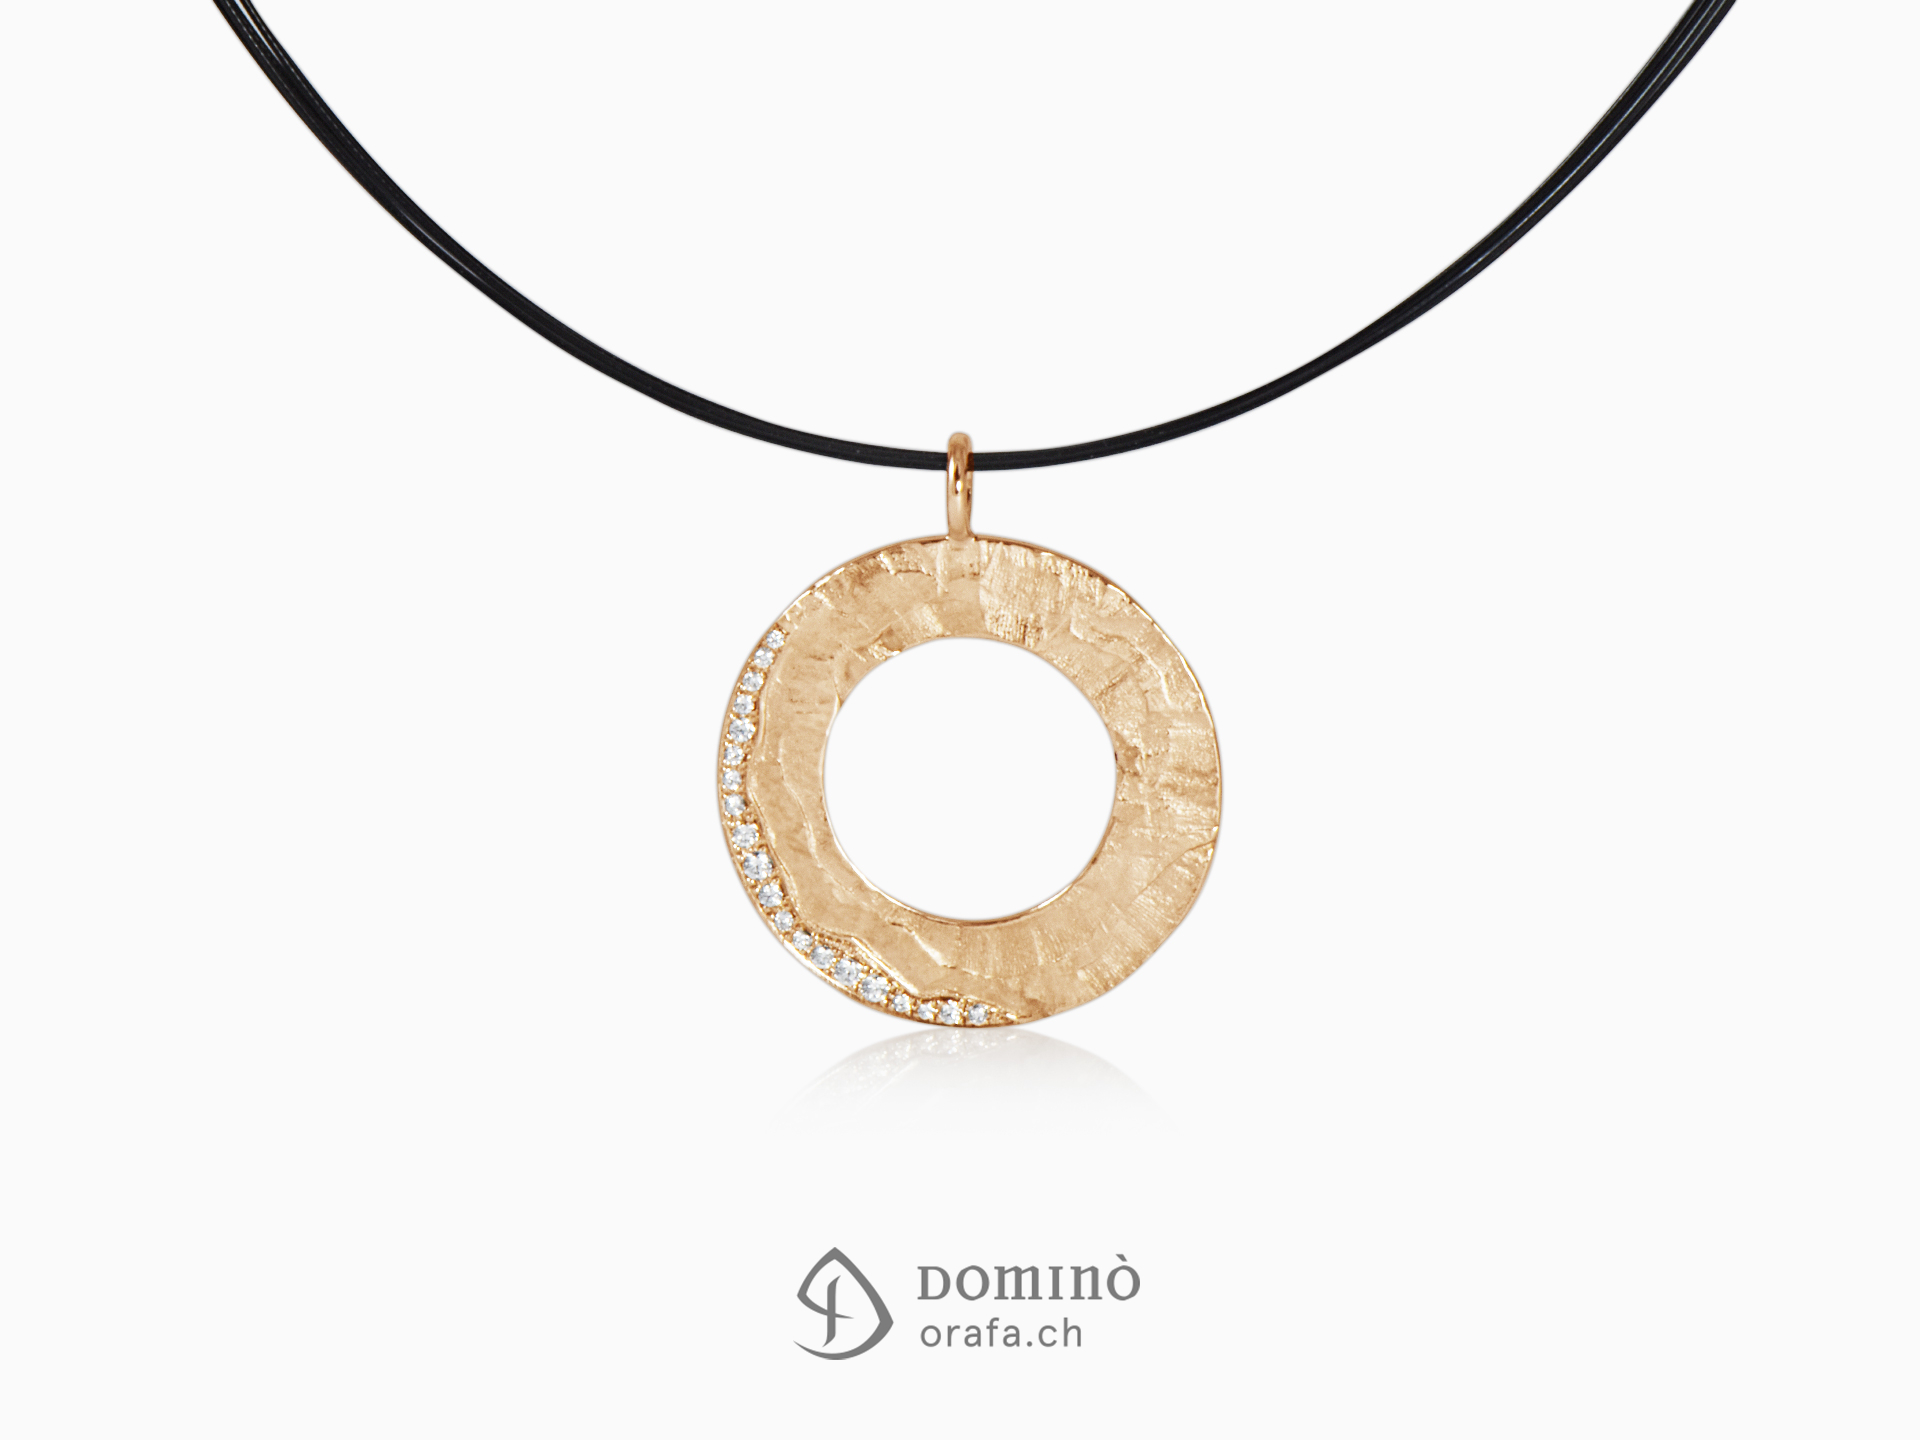 Circular Sentiero pendant with diamonds